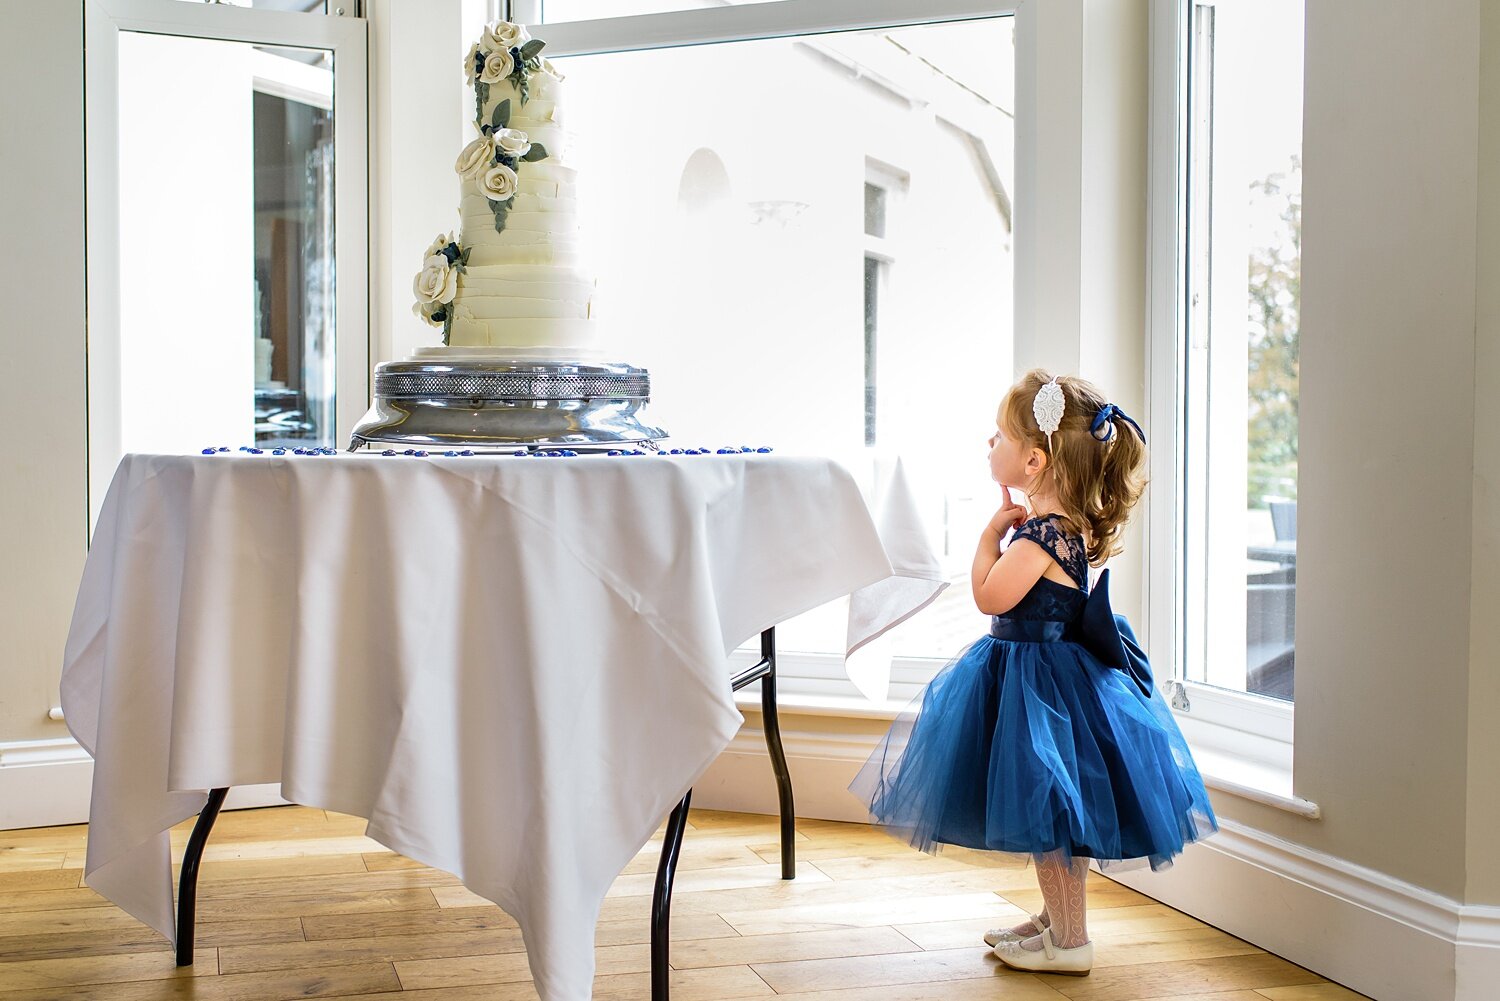 Flower girl and wedding cake